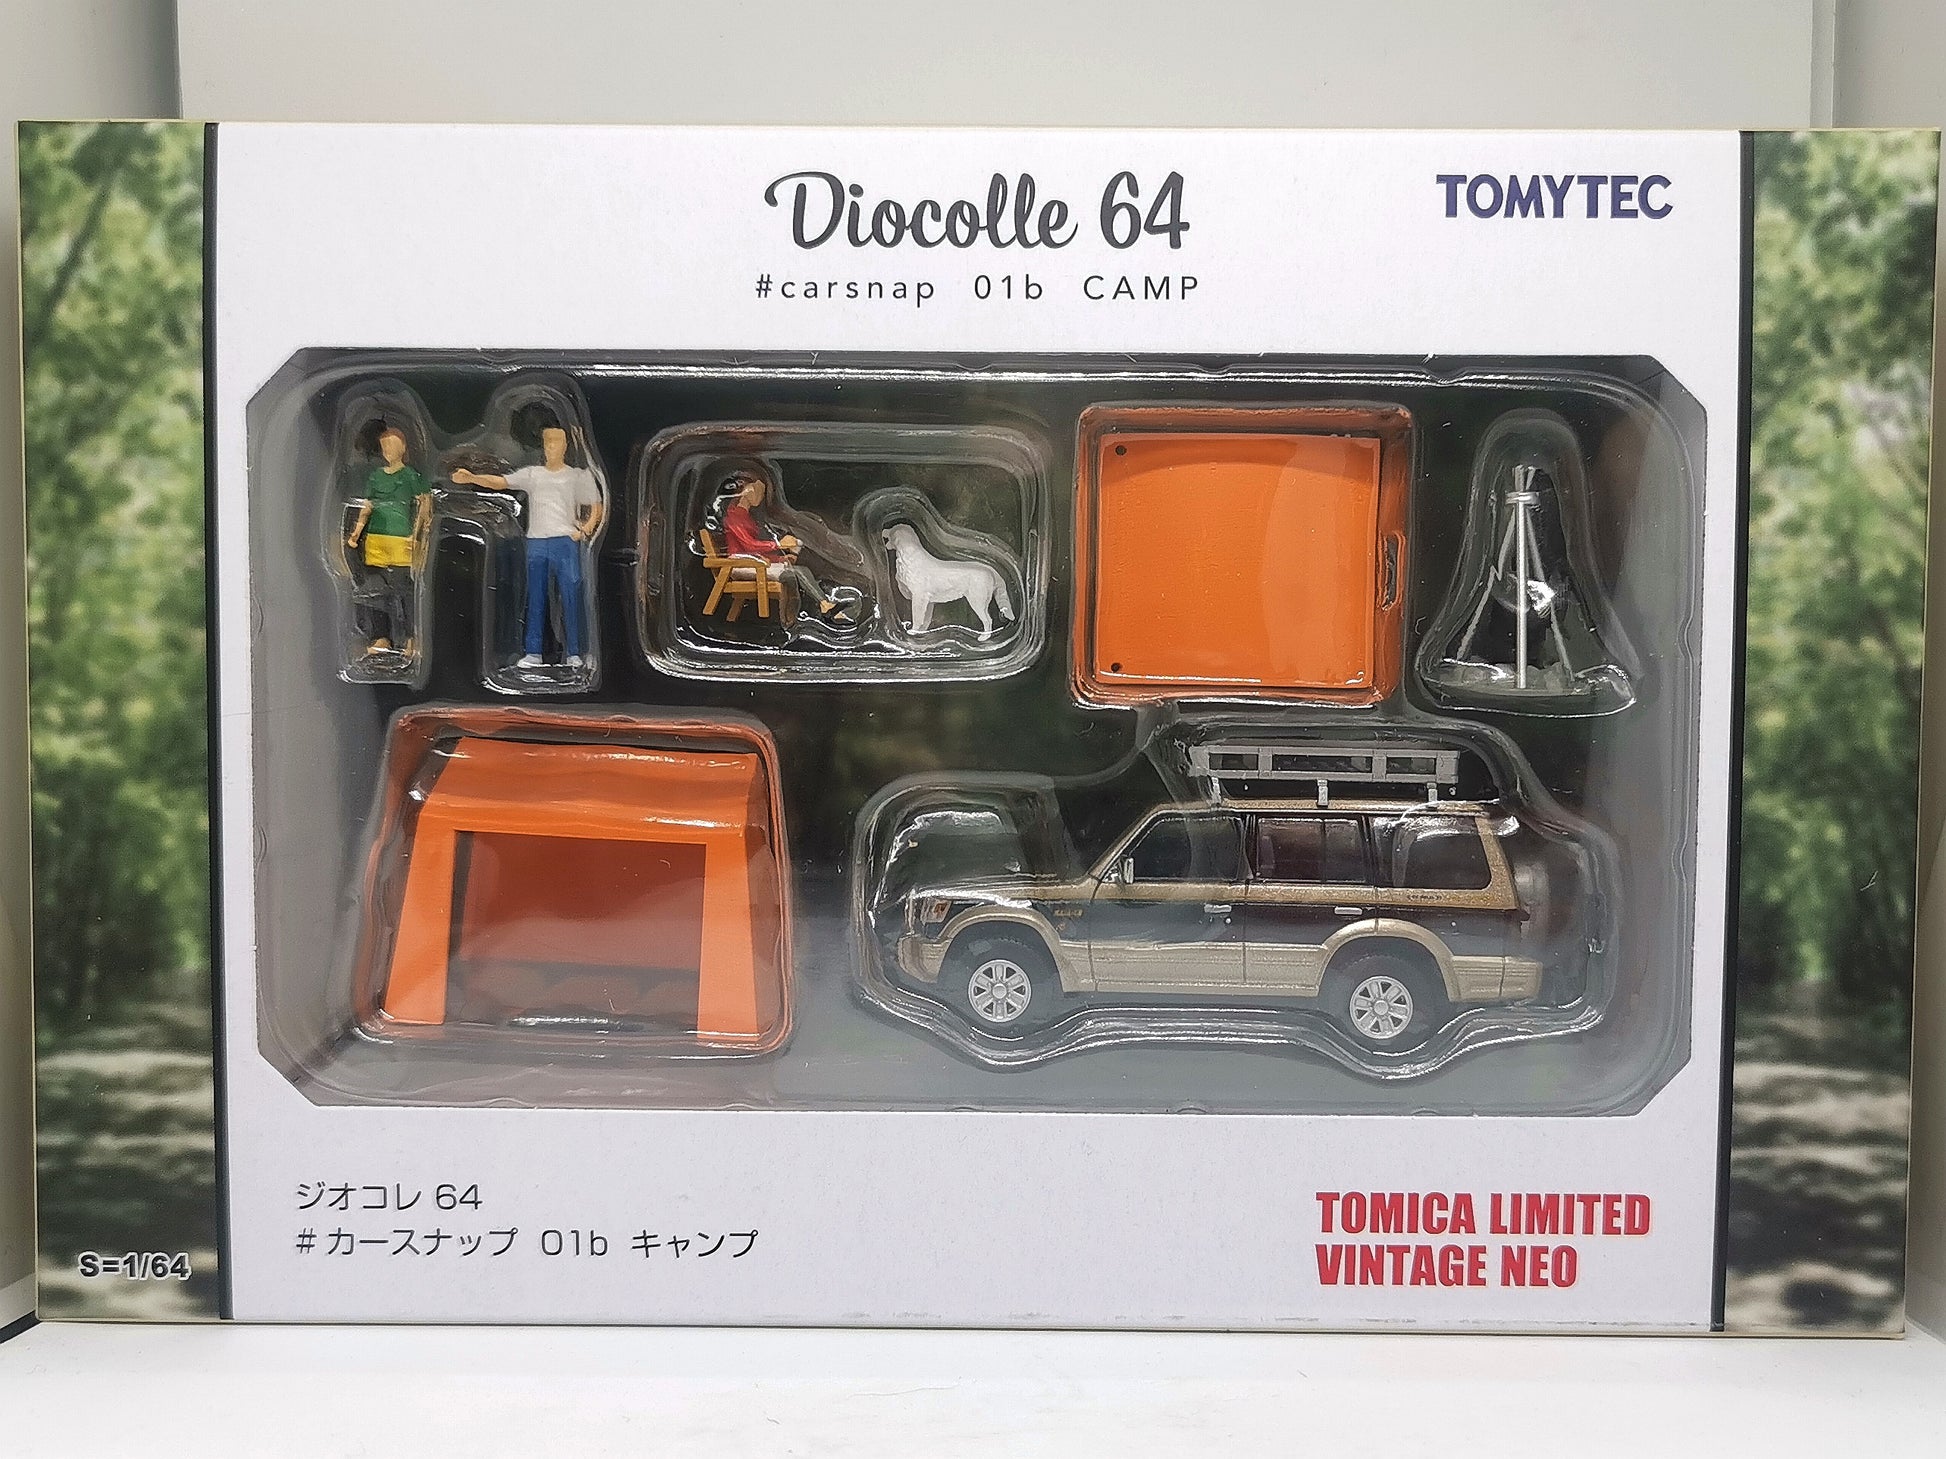 Tomytec Limited Vintage
Neo Diocolle64 Car Snap 01b Camp Diorama Takara Tomy